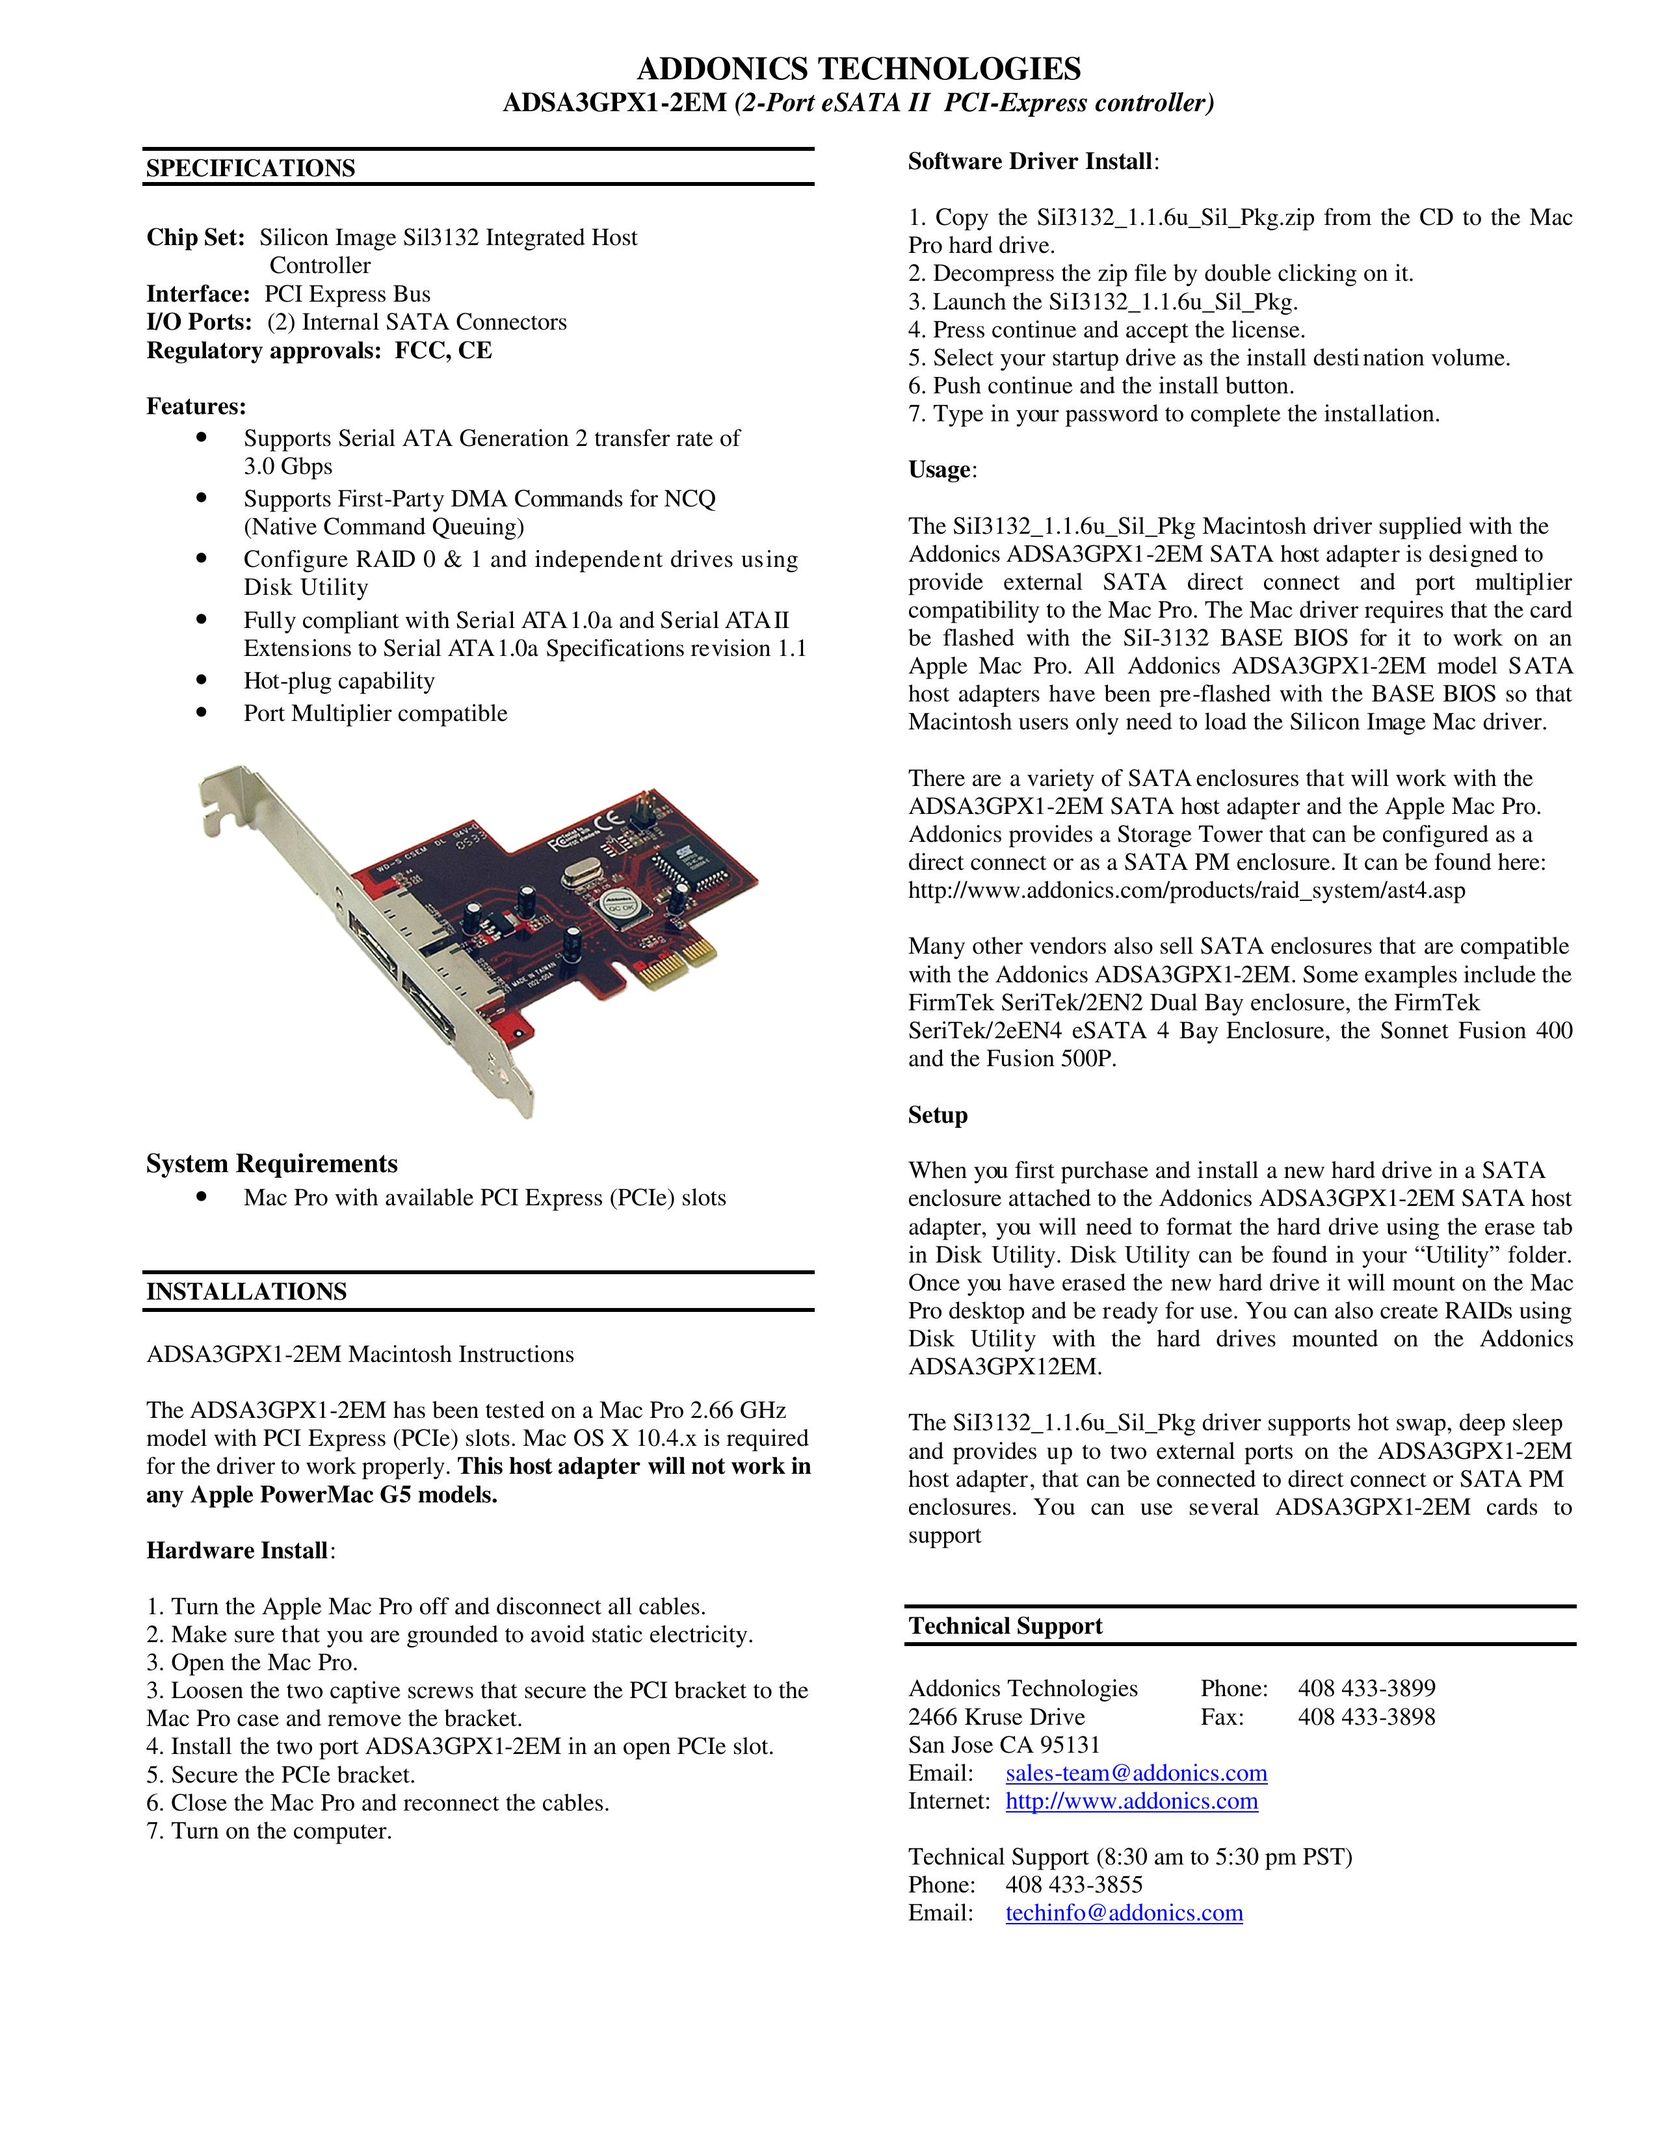 Addonics Technologies ADSA3GPX1-2EM Computer Hardware User Manual